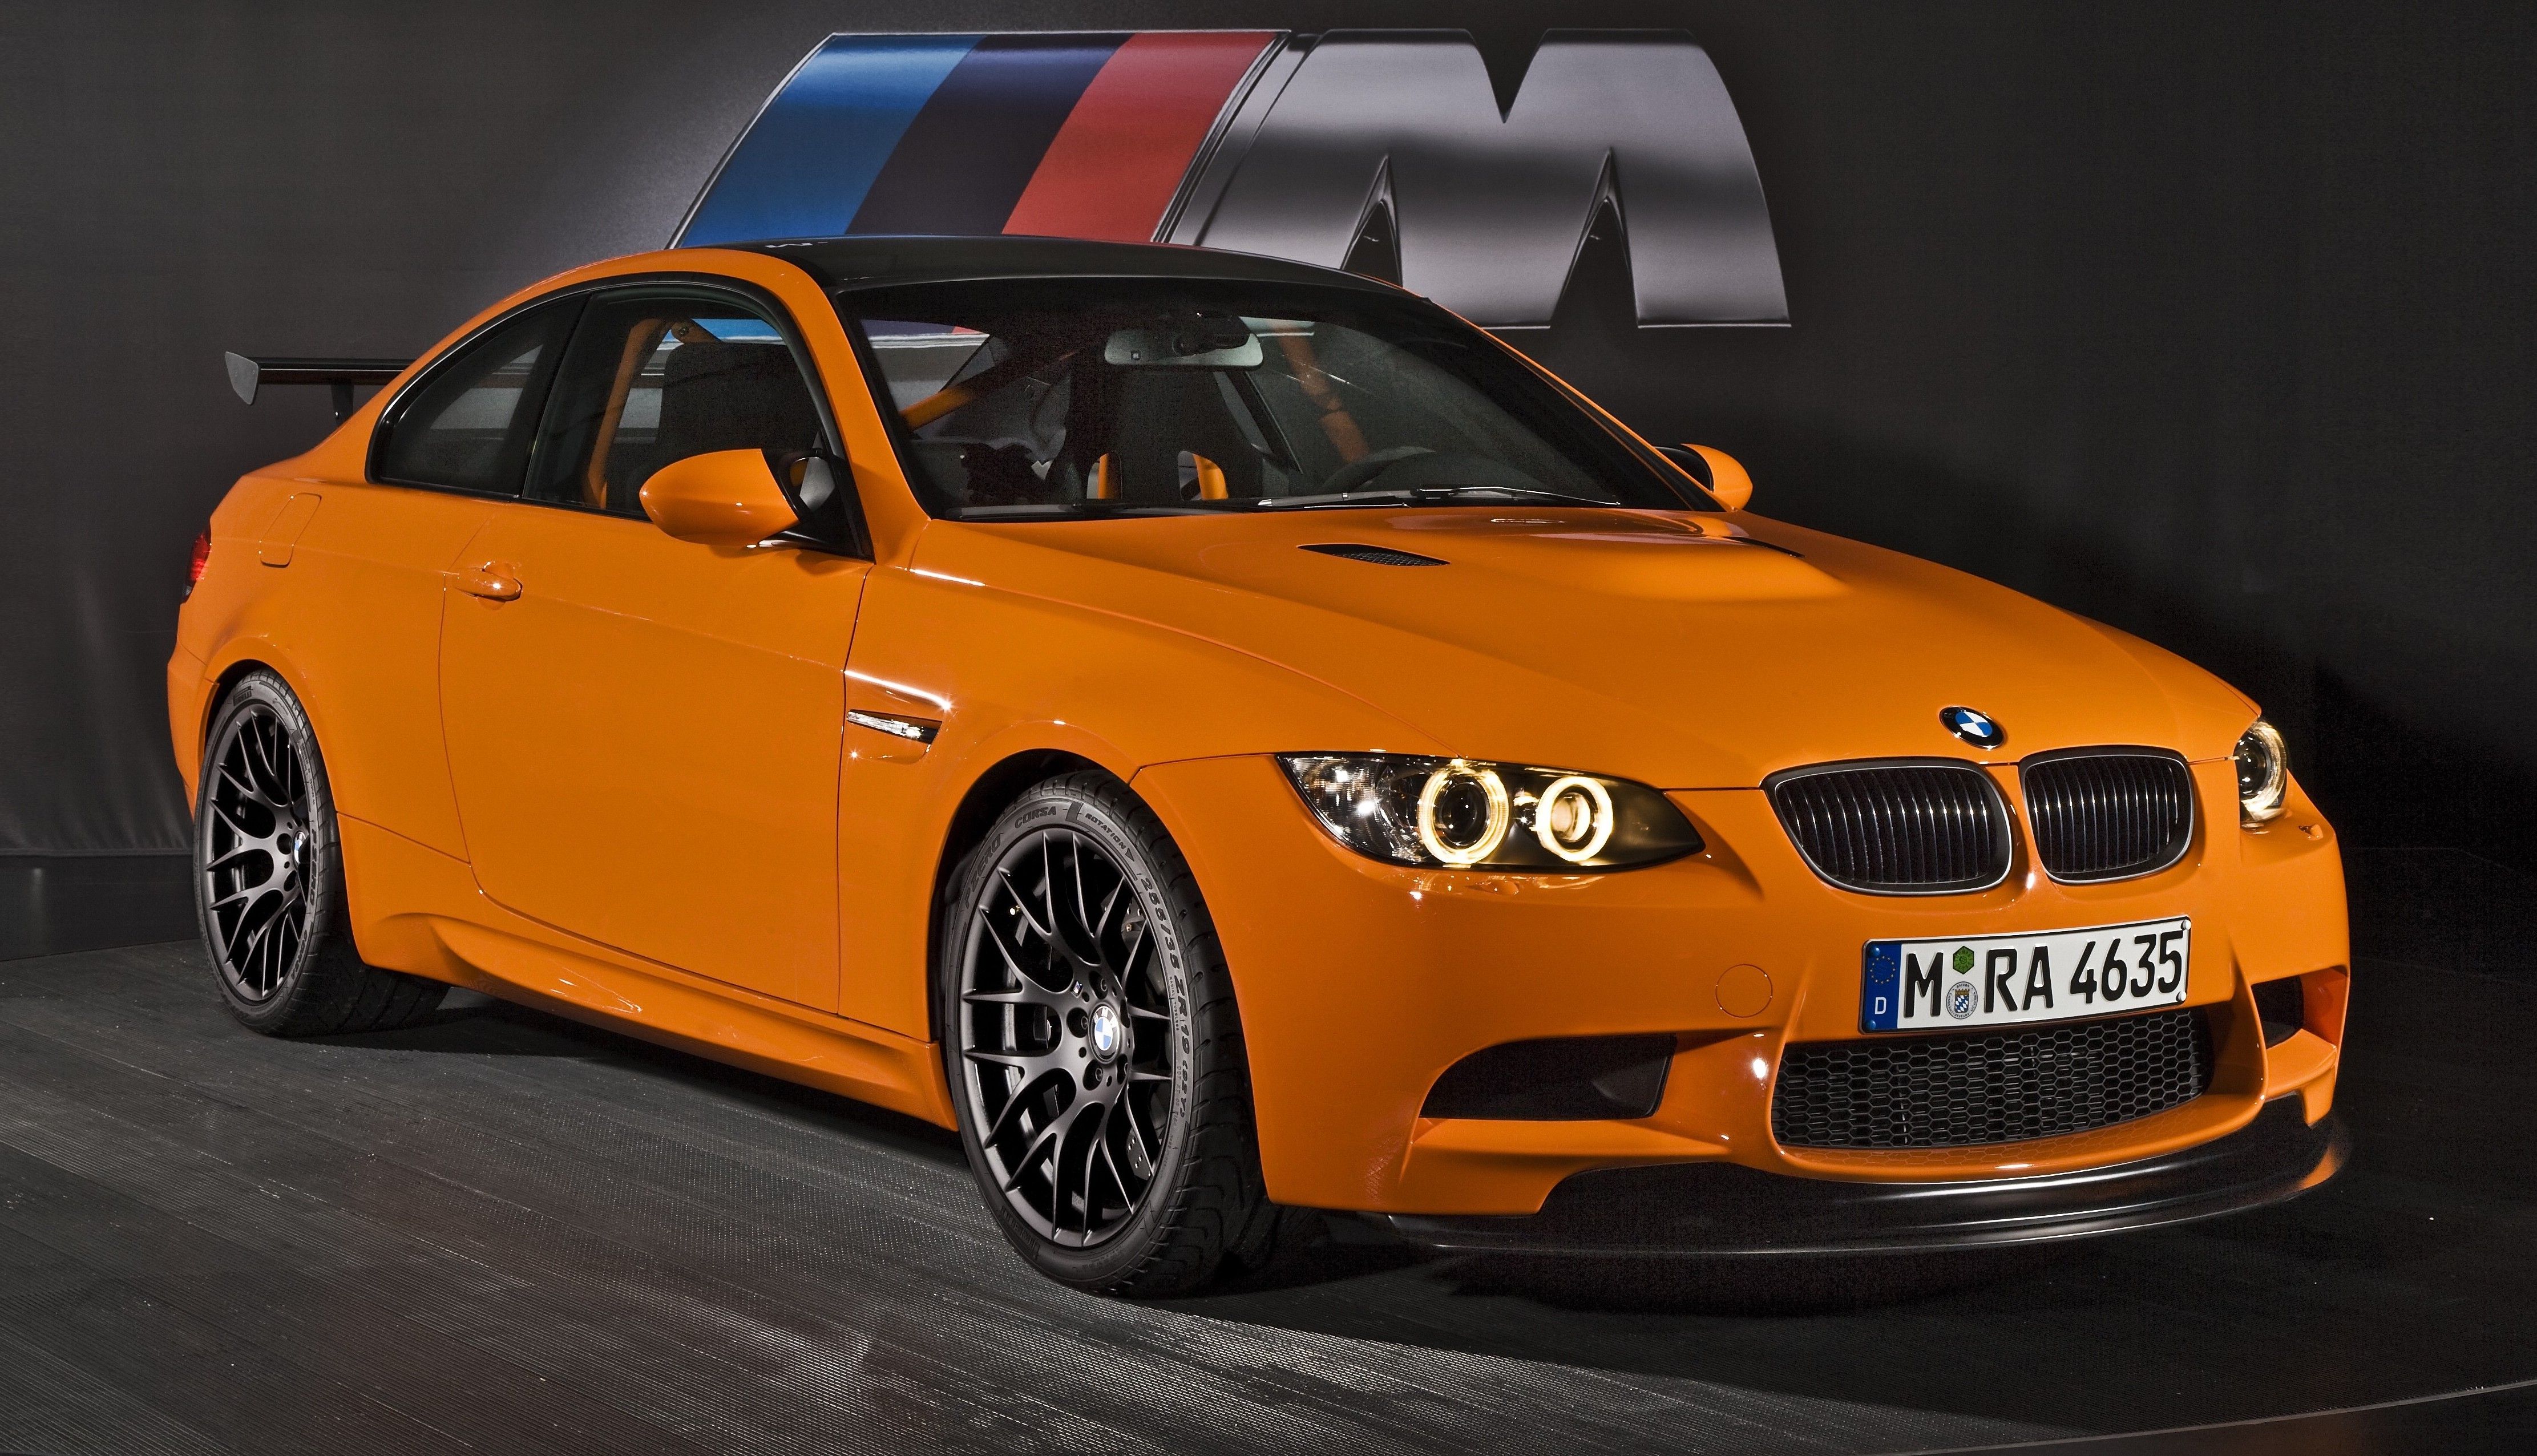 An orange BMW M3 GTS